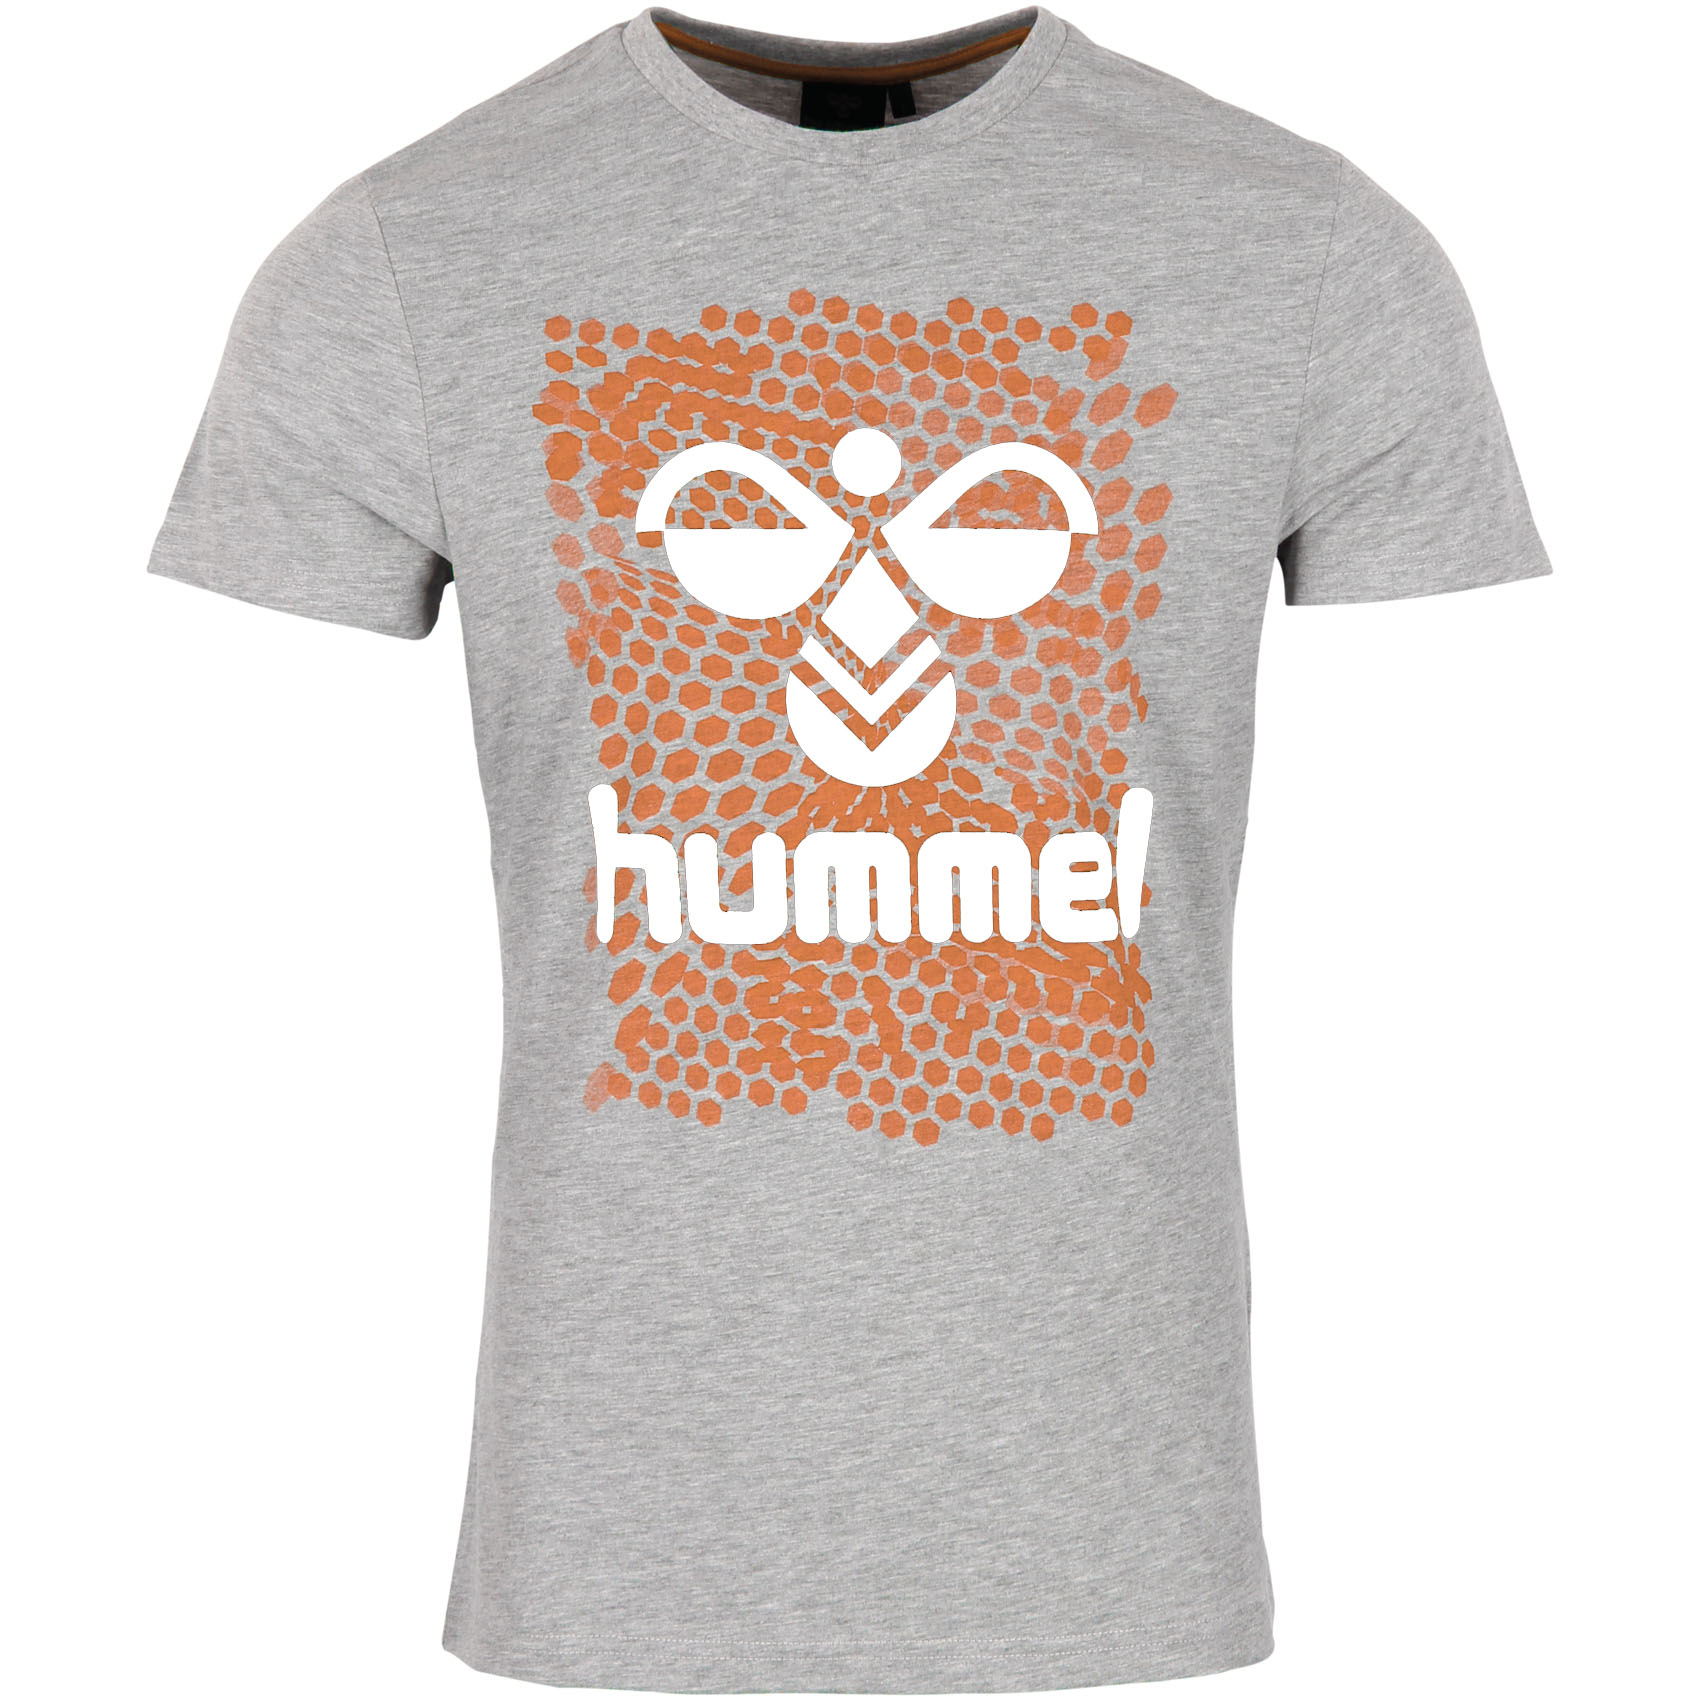 Hummel T-Shirt Hexagon - Grau/Orange, Gr. S